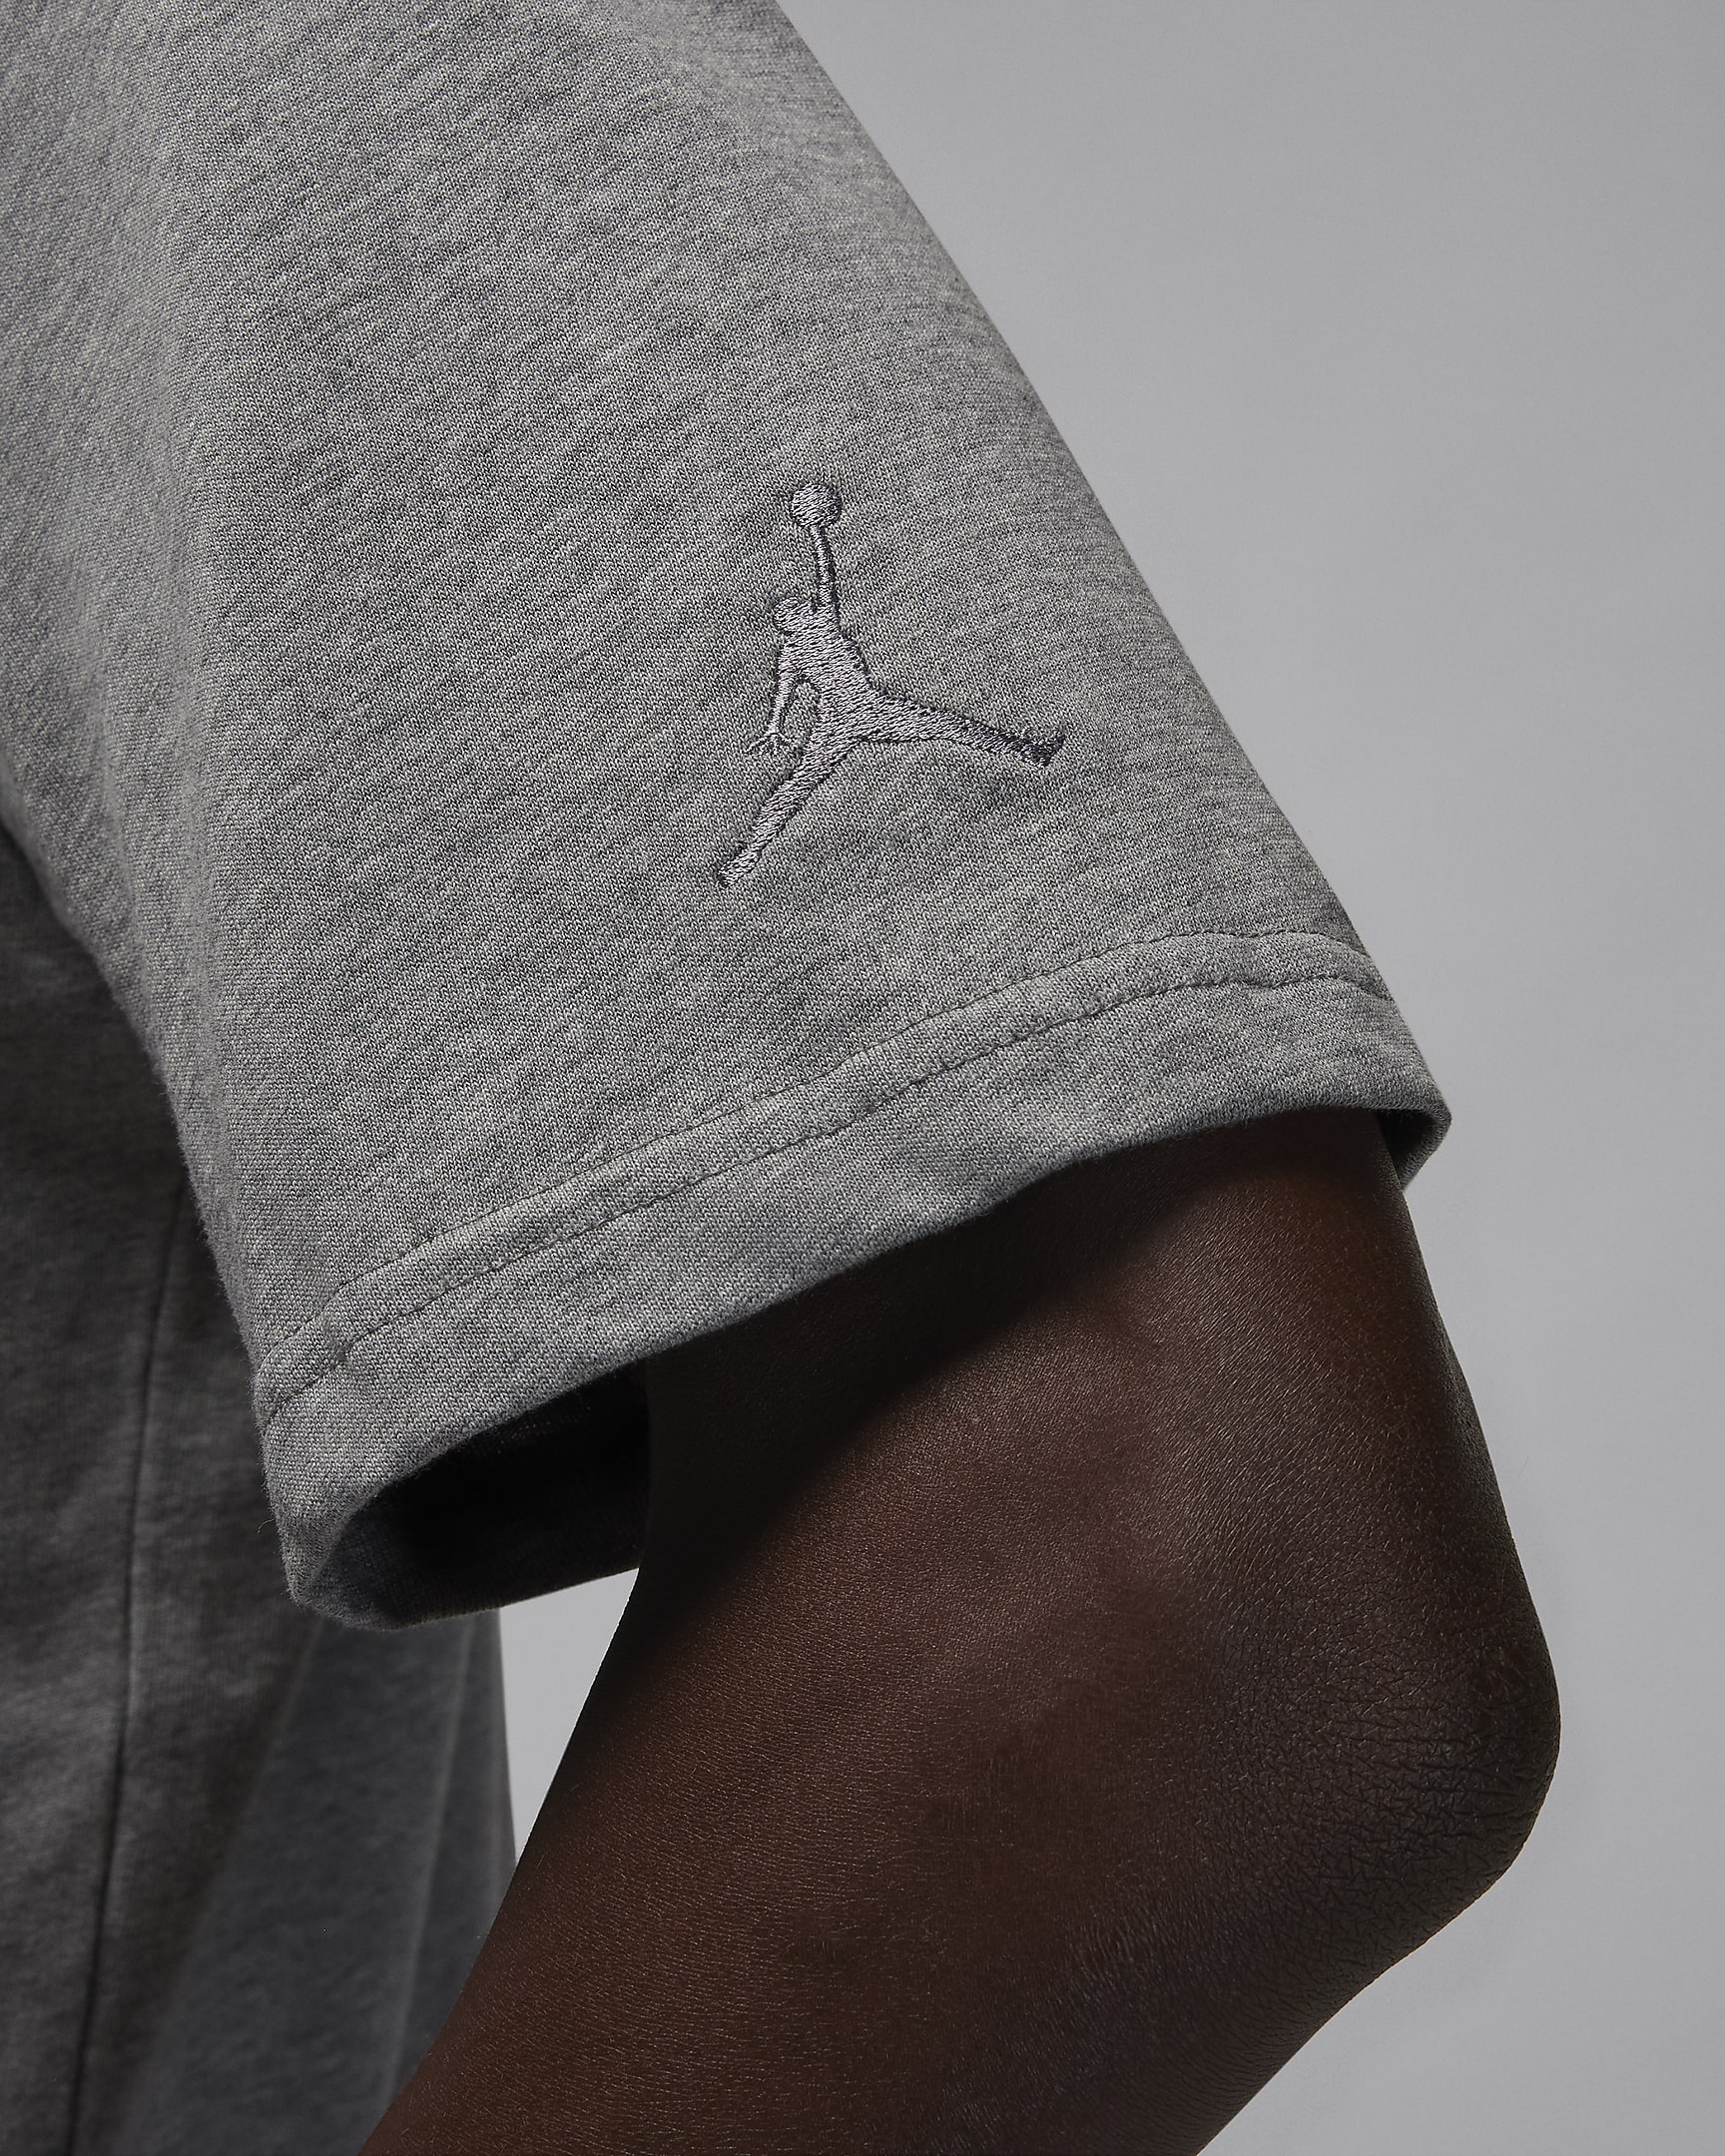 Jordan Brand Men's T-Shirt. Nike ZA